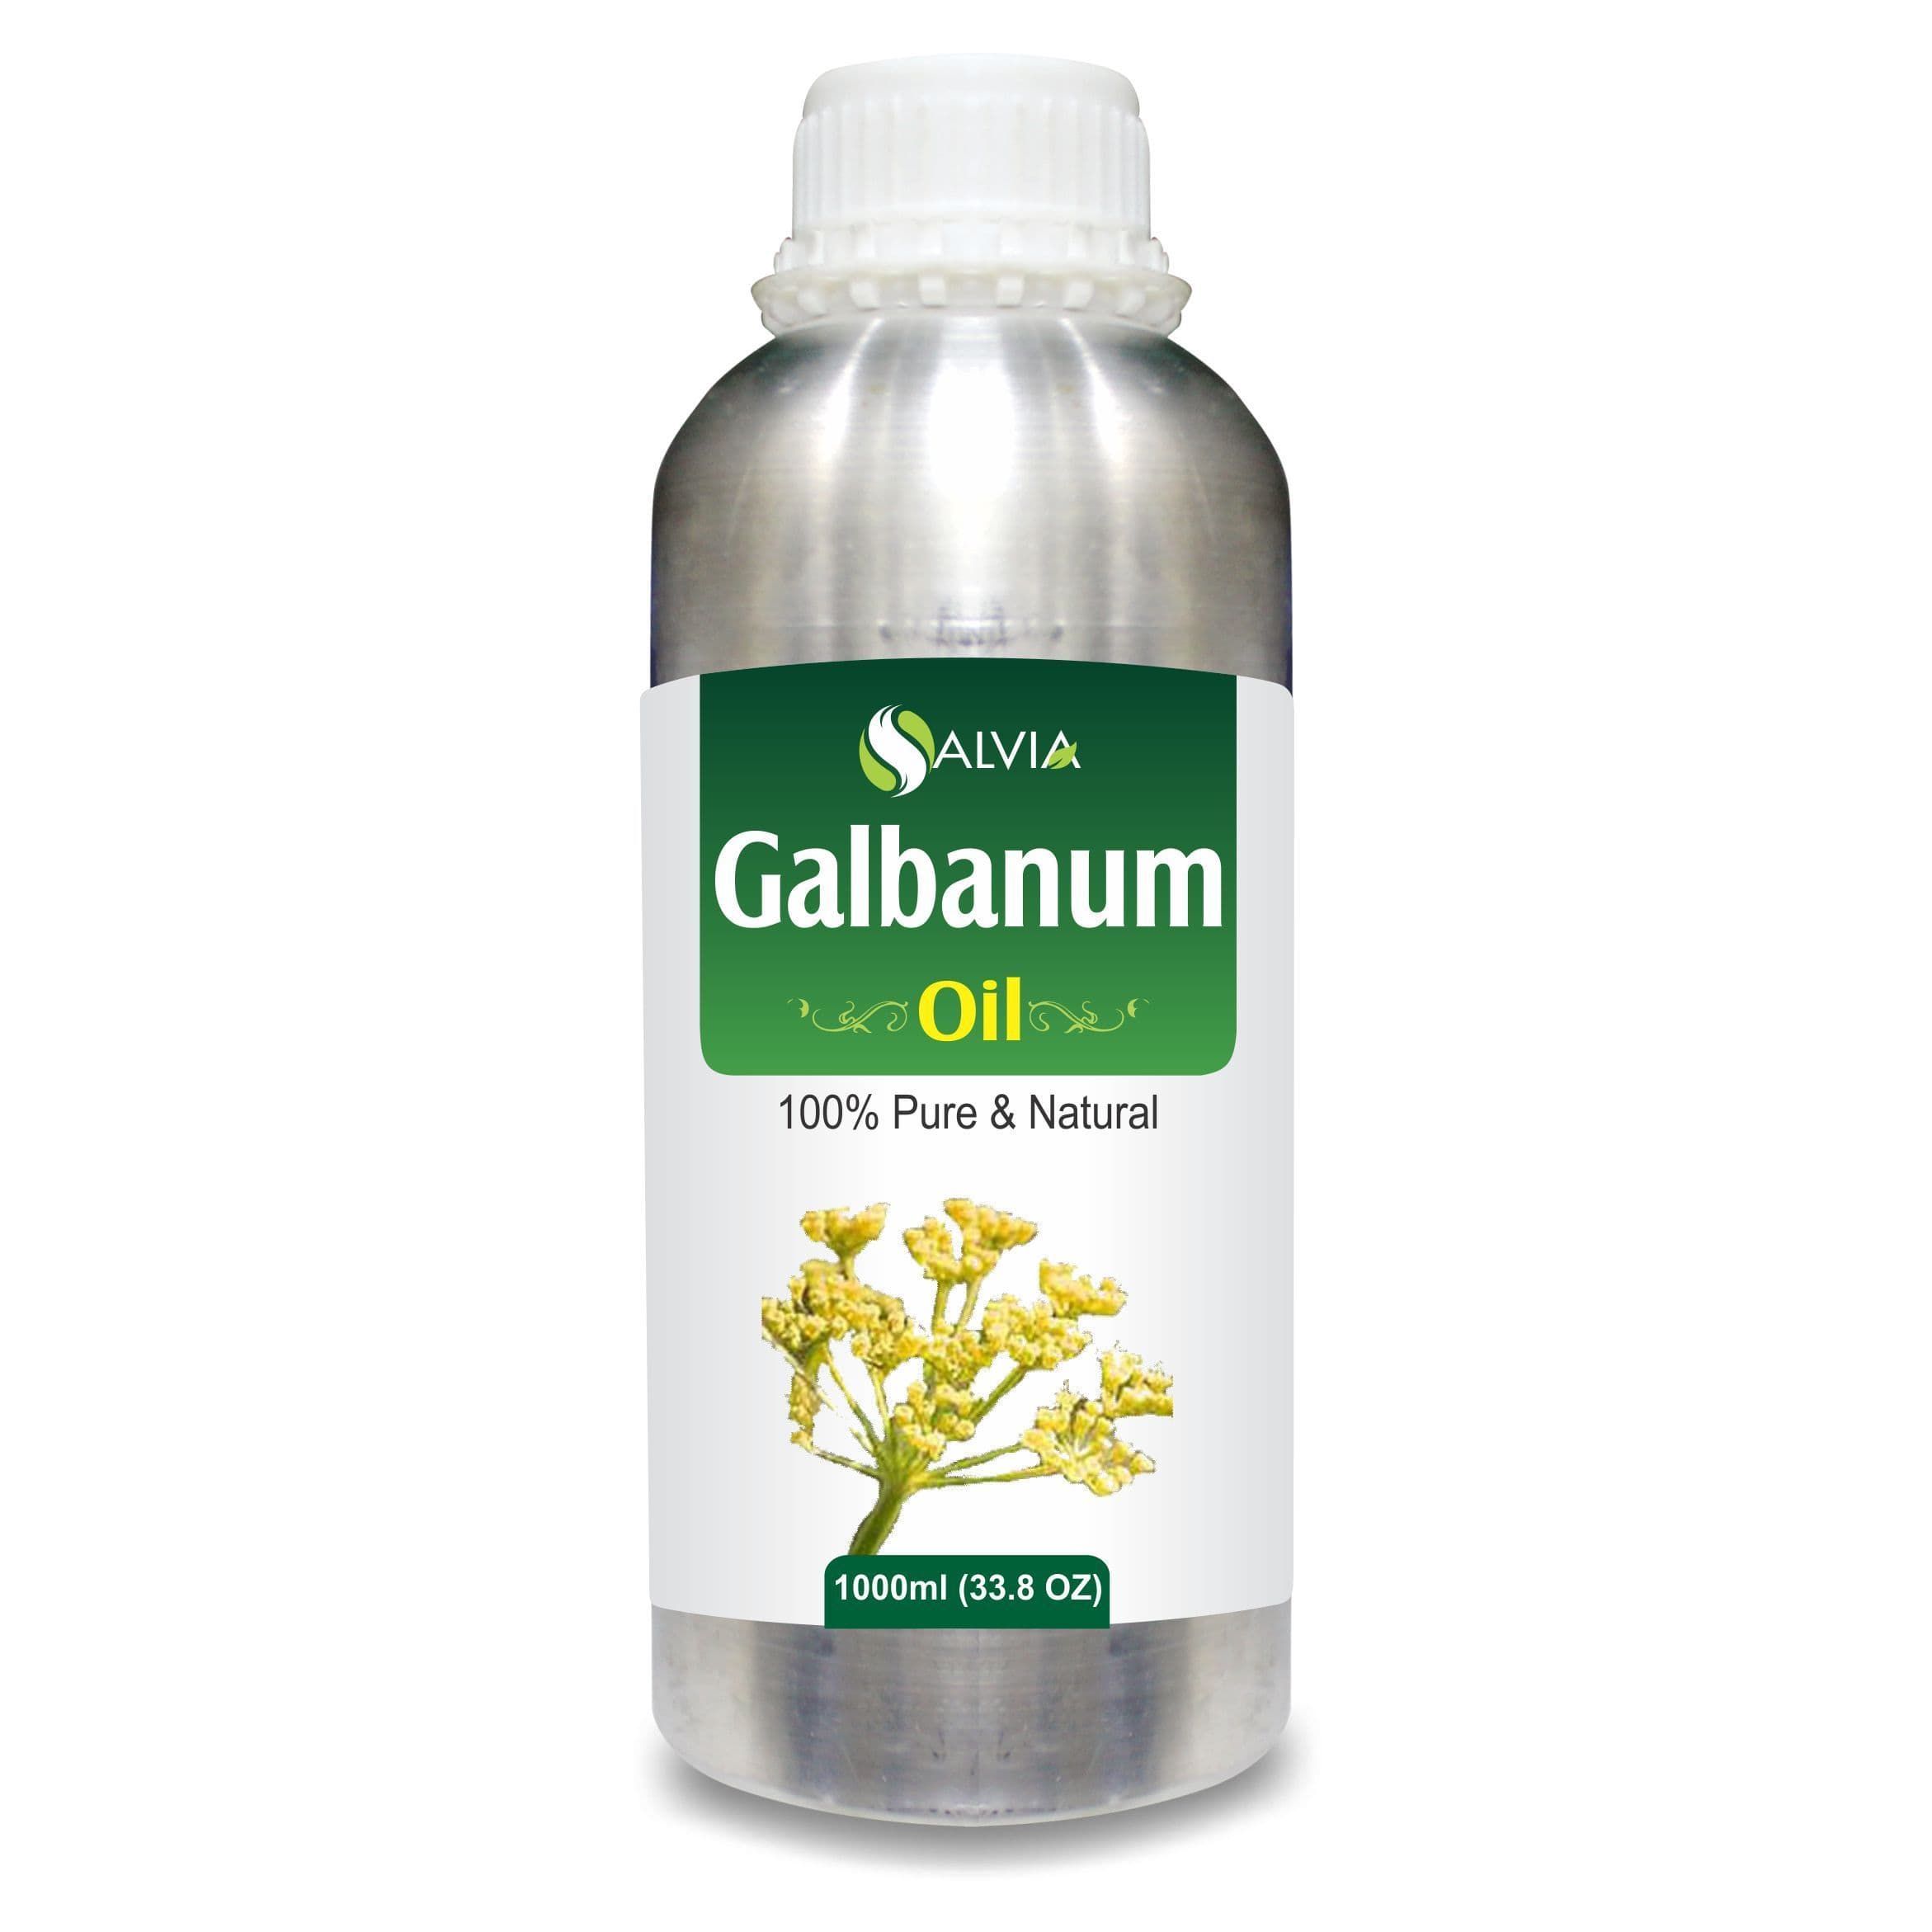 galbanum oil benefits